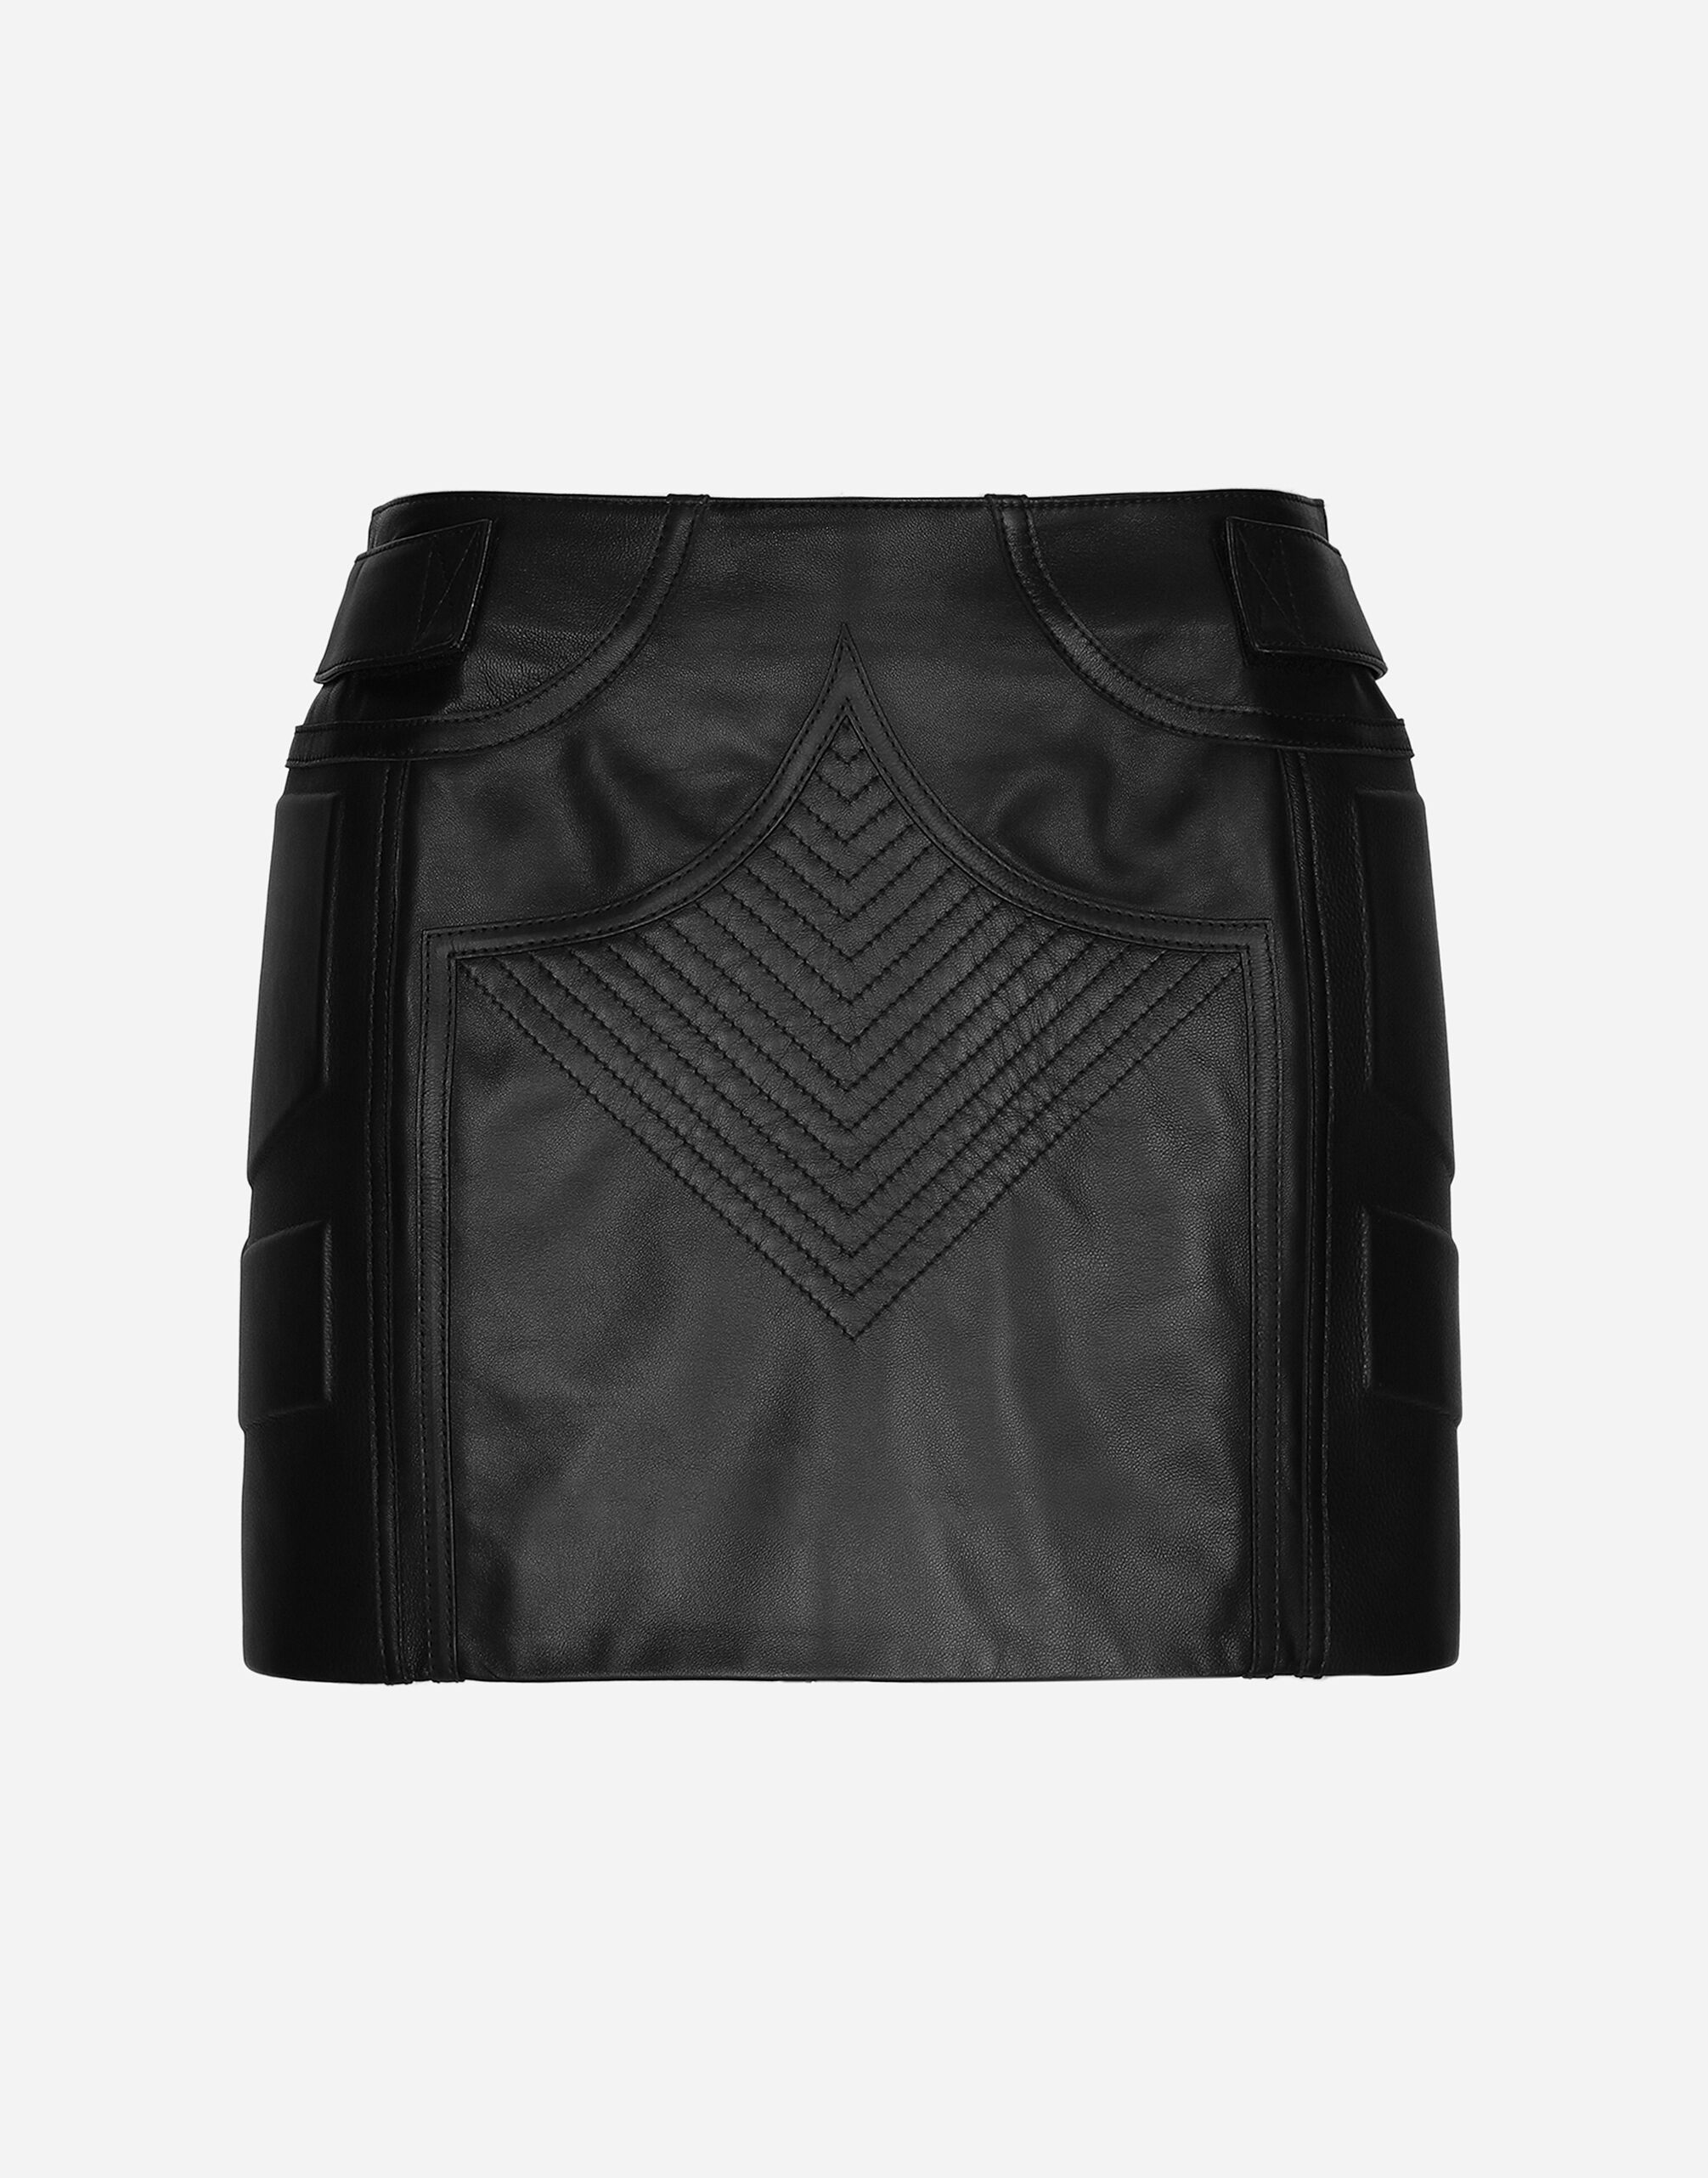 Dolce & Gabbana Nappa leather miniskirt Black VG6186VN187